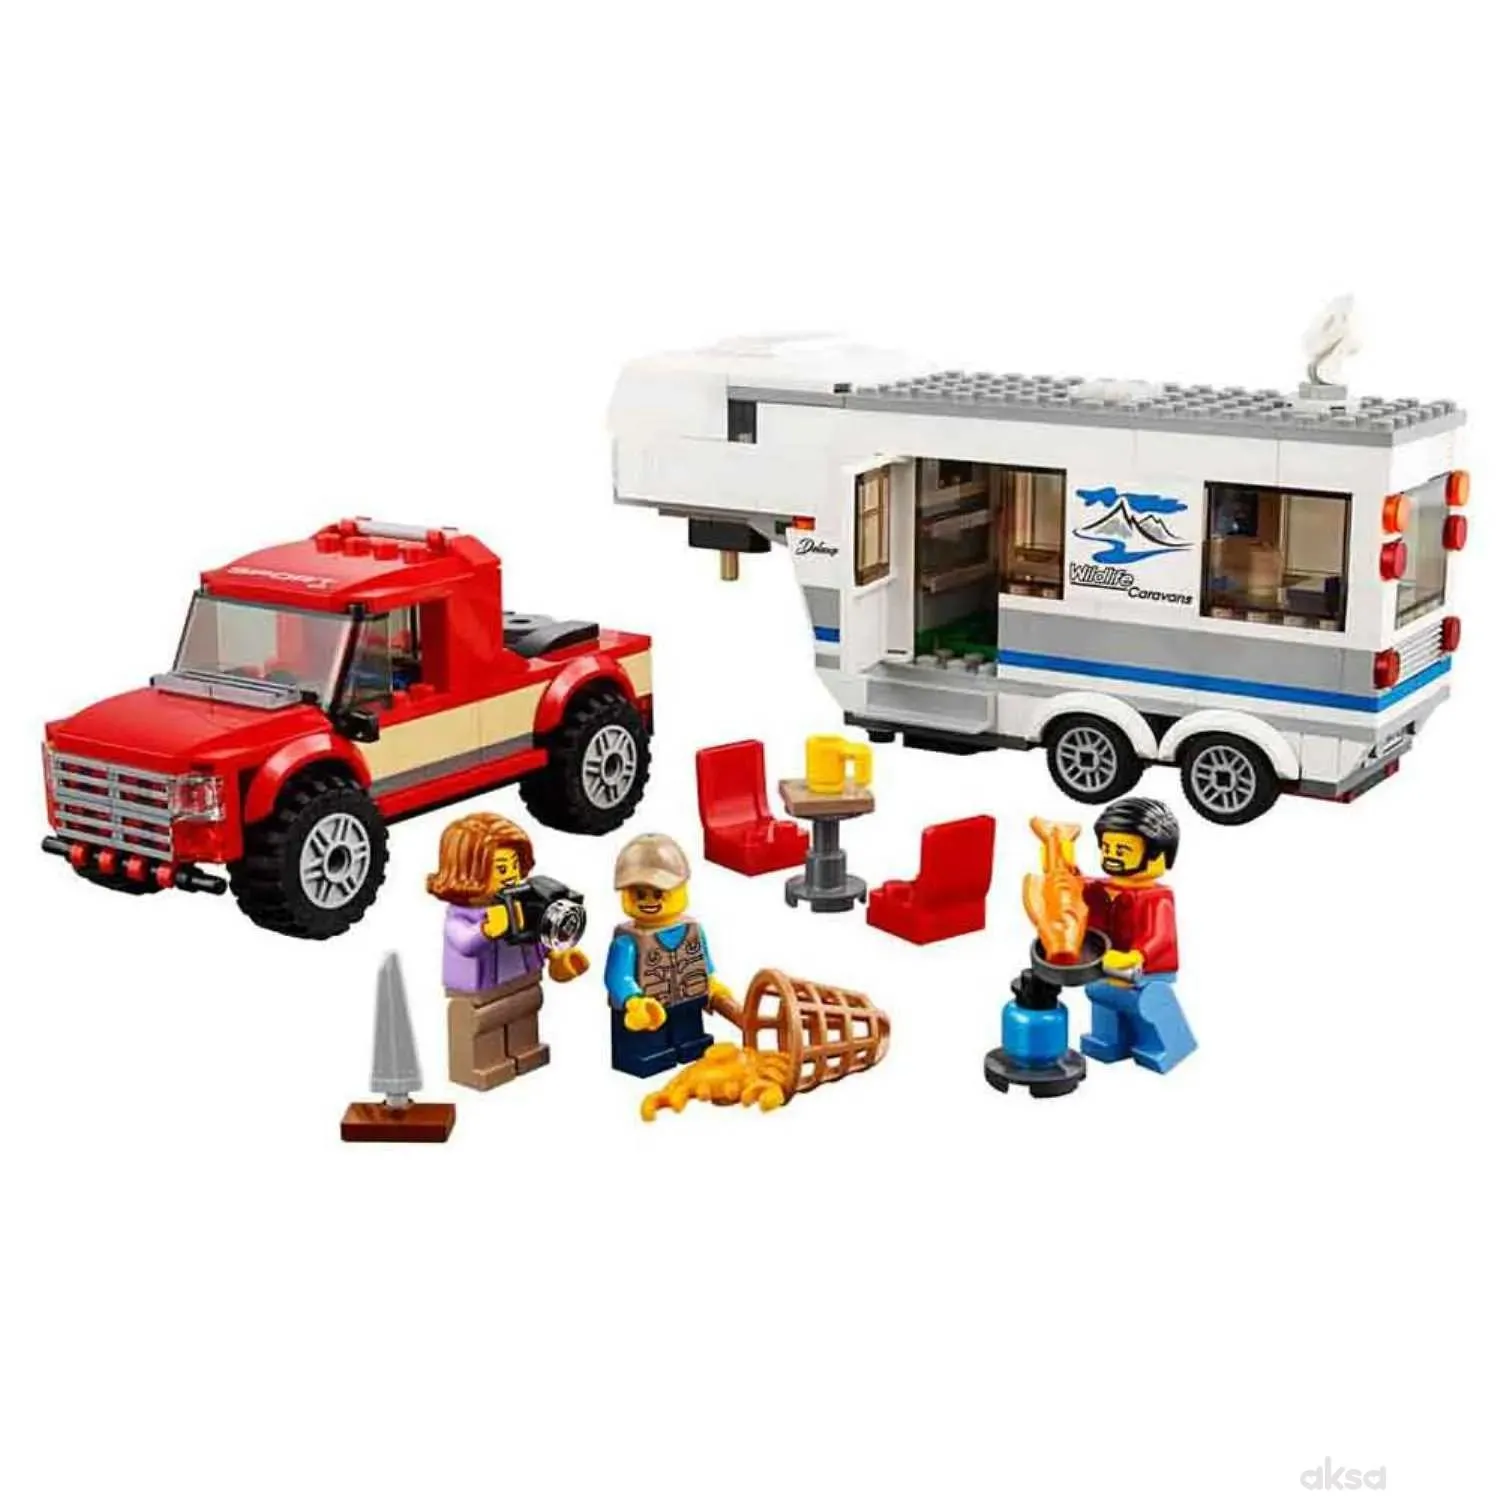 Lego city pickup and caravan 